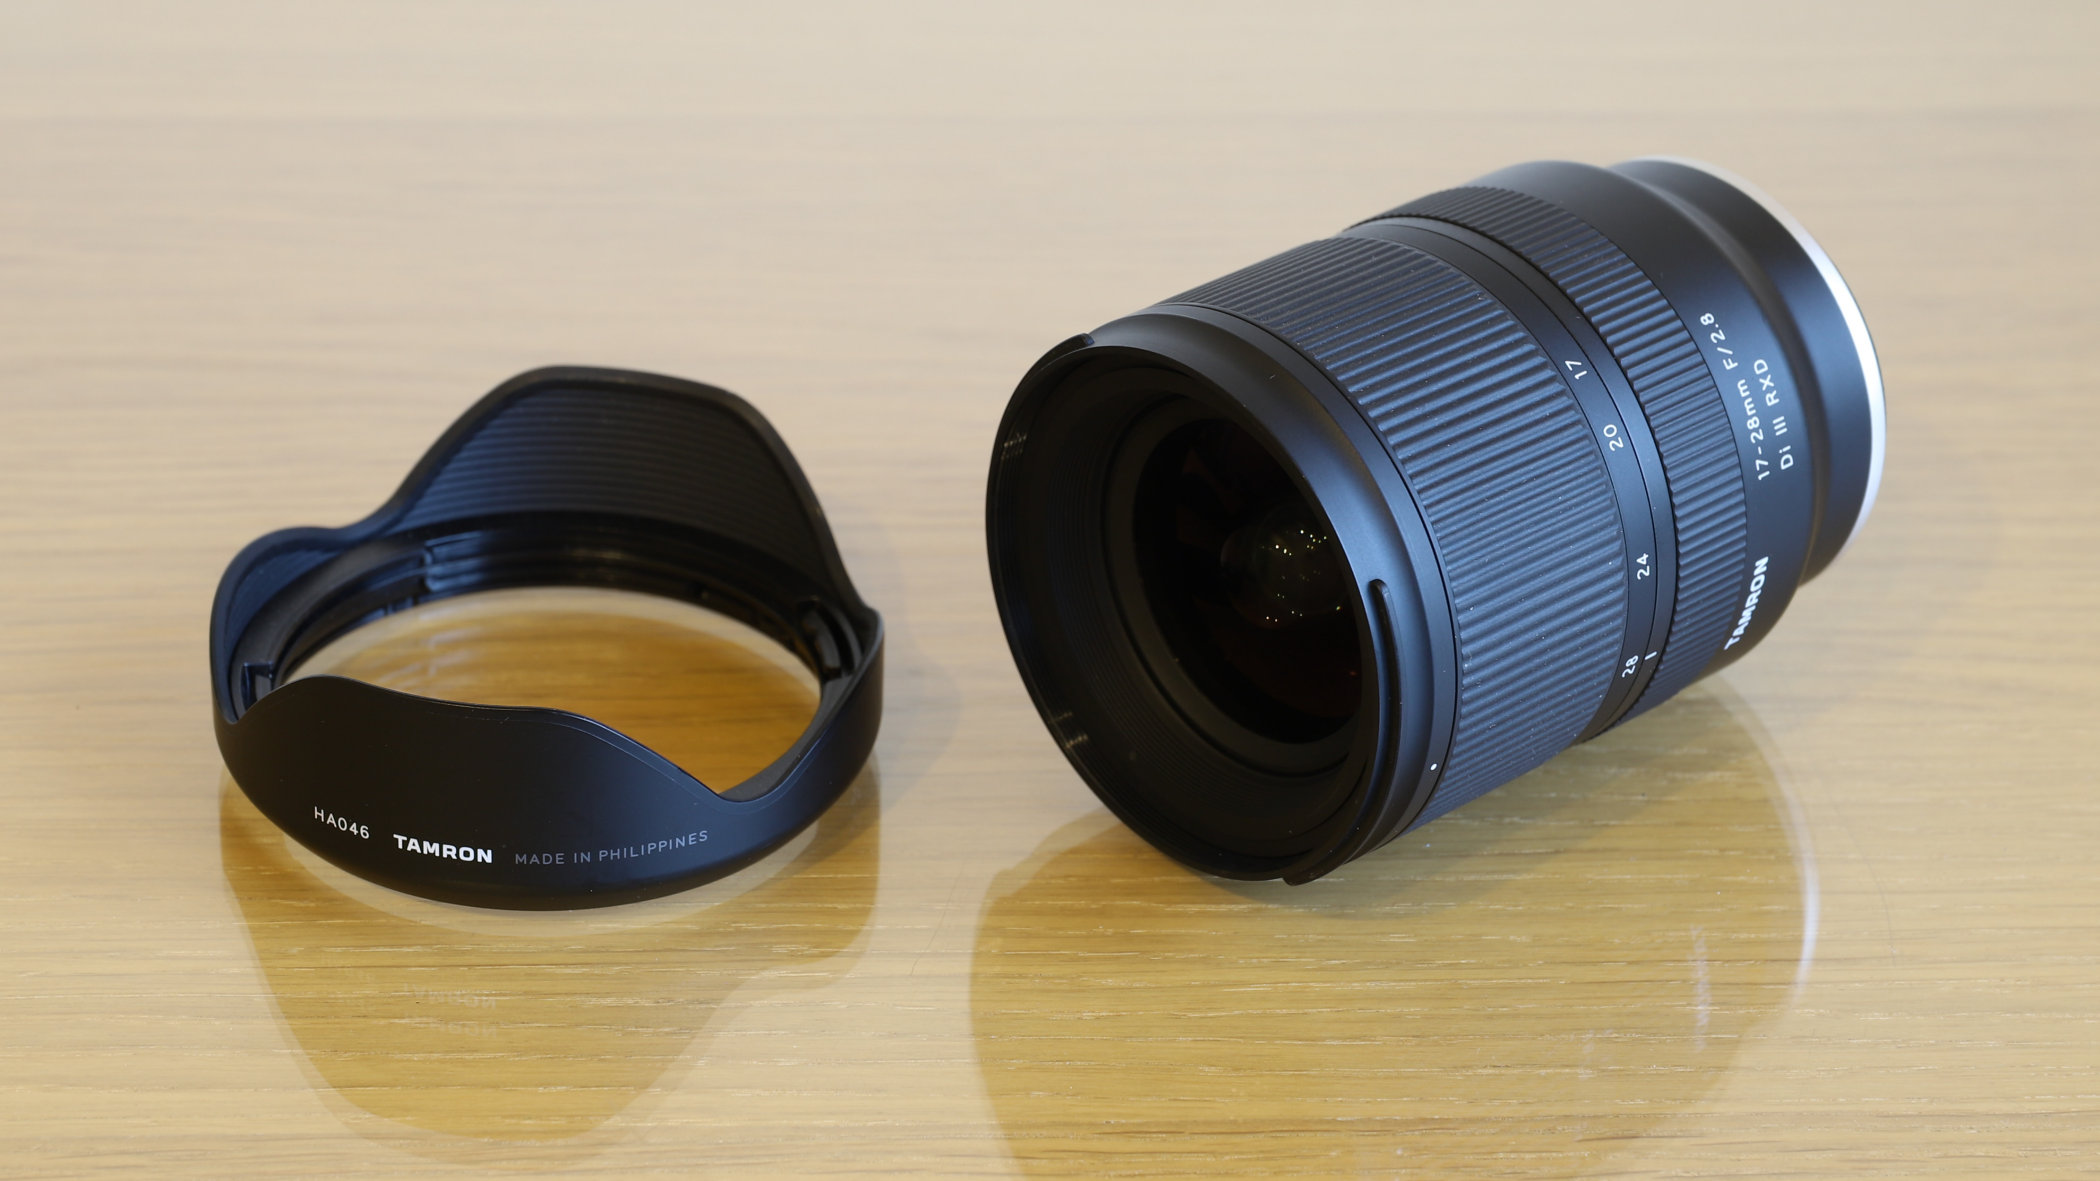 Best Sony lenses: Tamron 17-28mm f/2.8 Di III